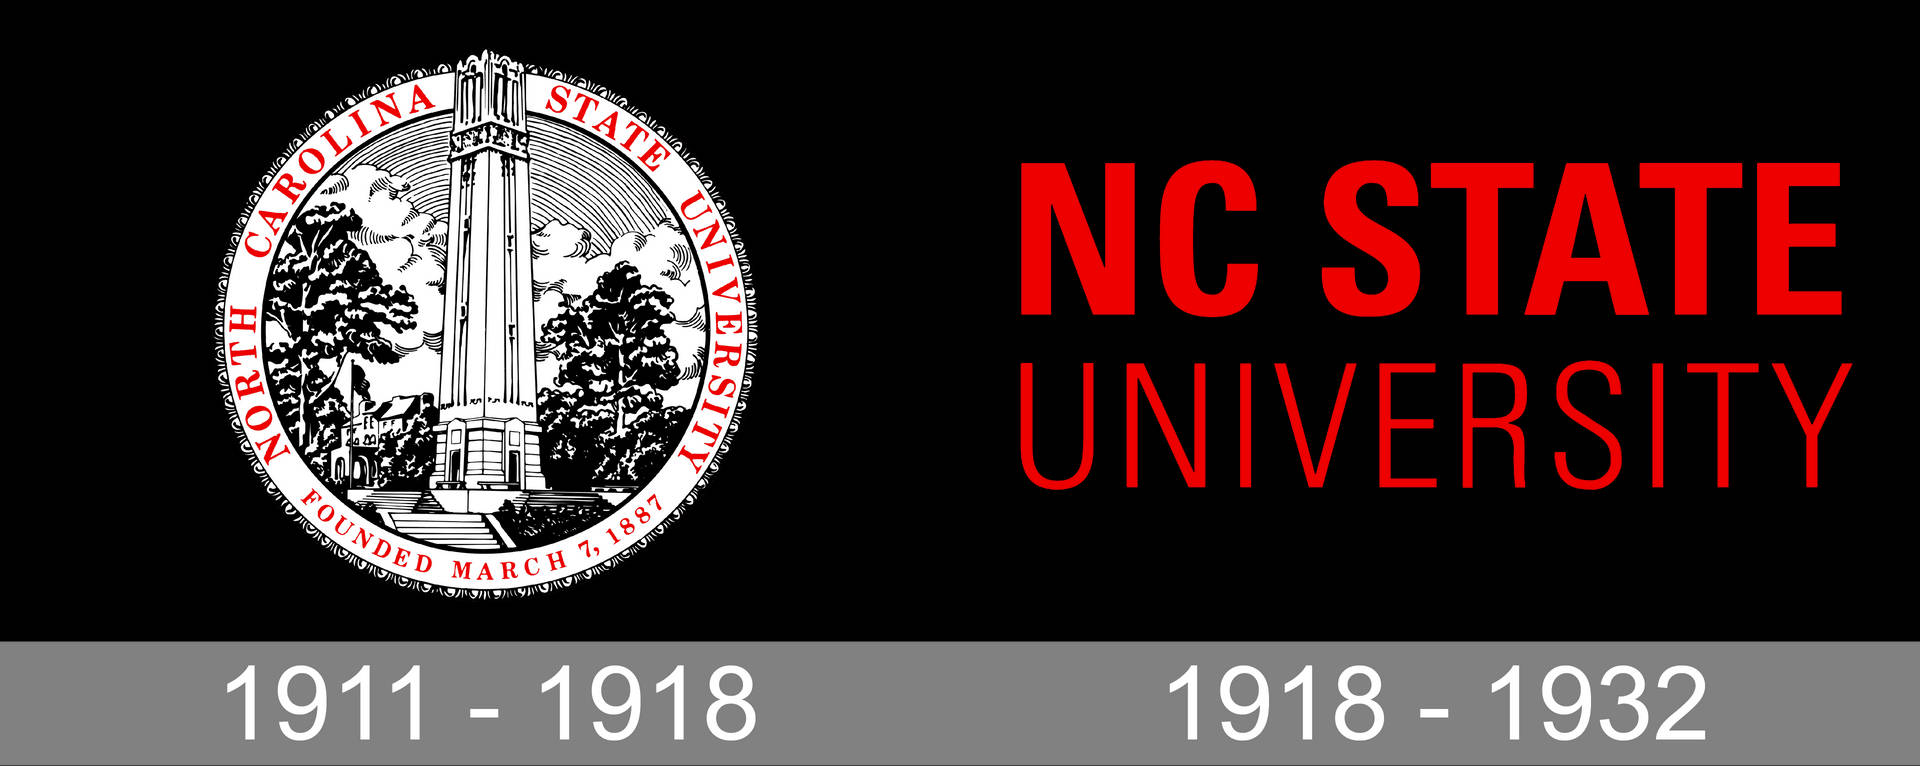 North Carolina State University 3840 X 1532 Wallpaper